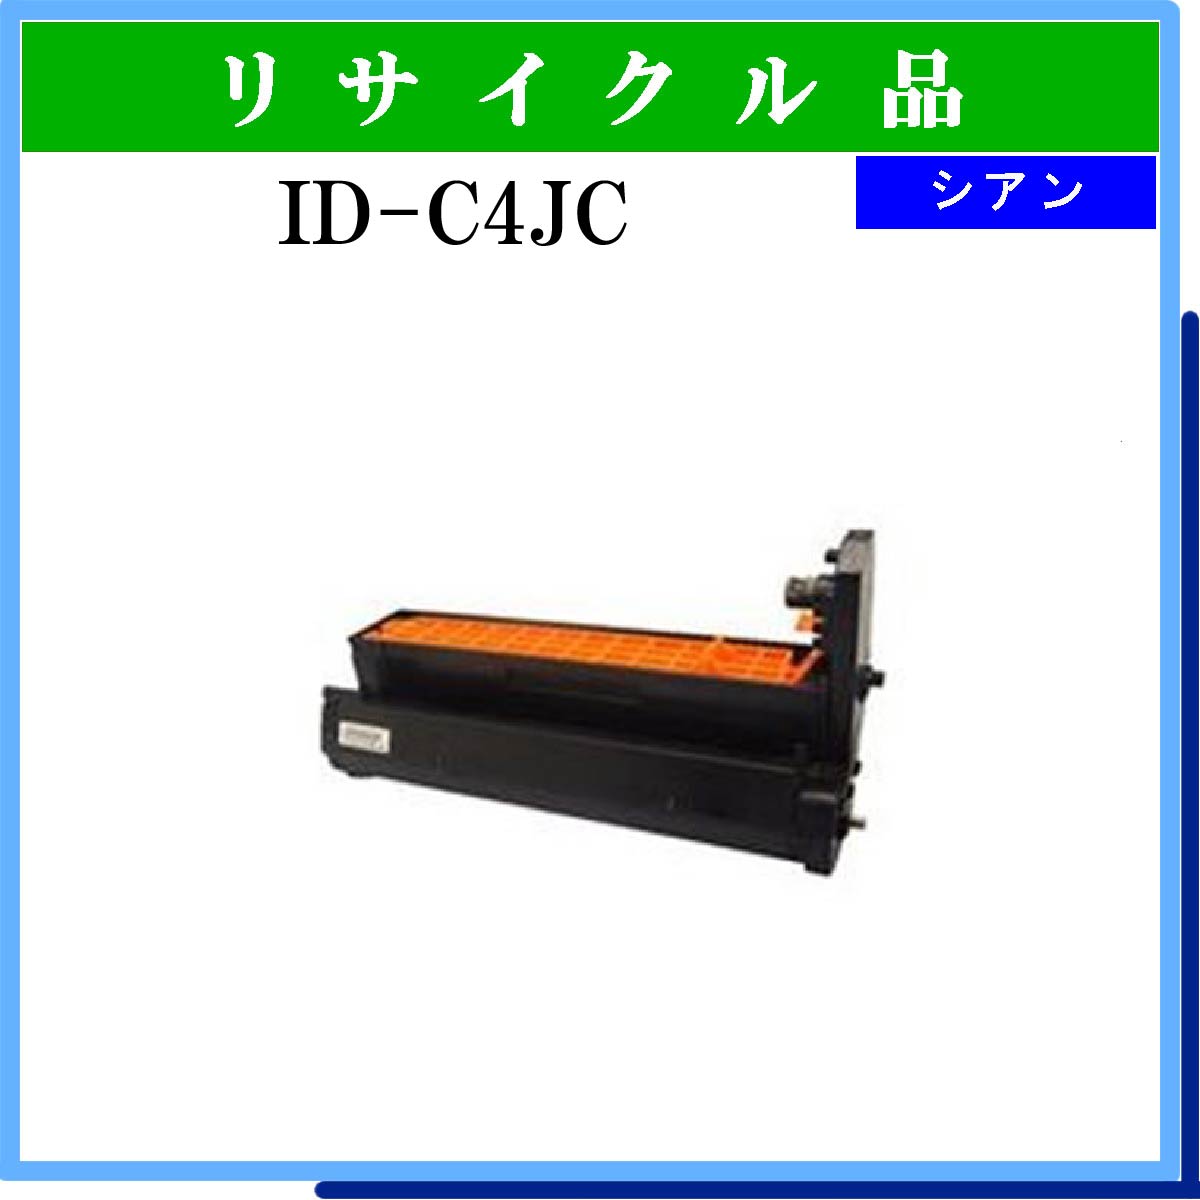 ID-C4JC